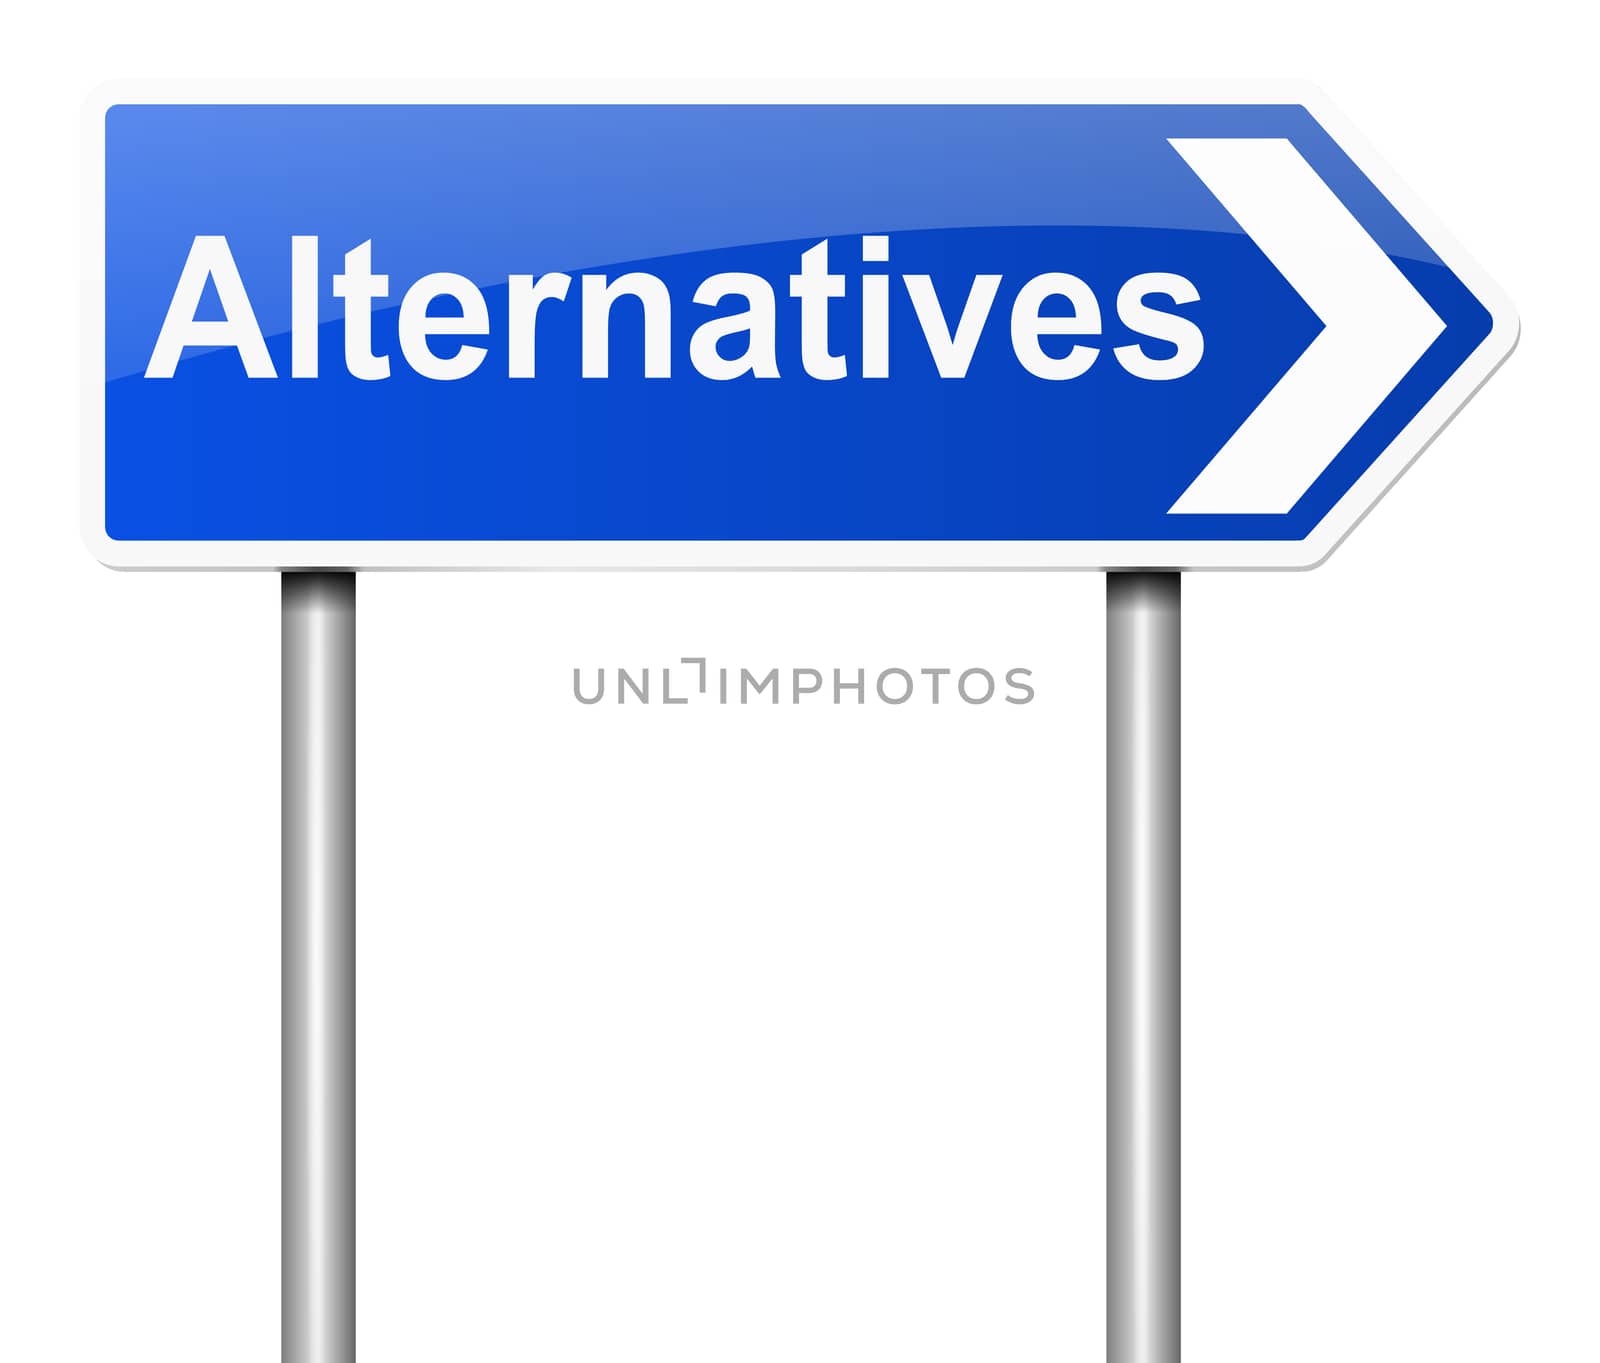 Alternatives concept. by 72soul